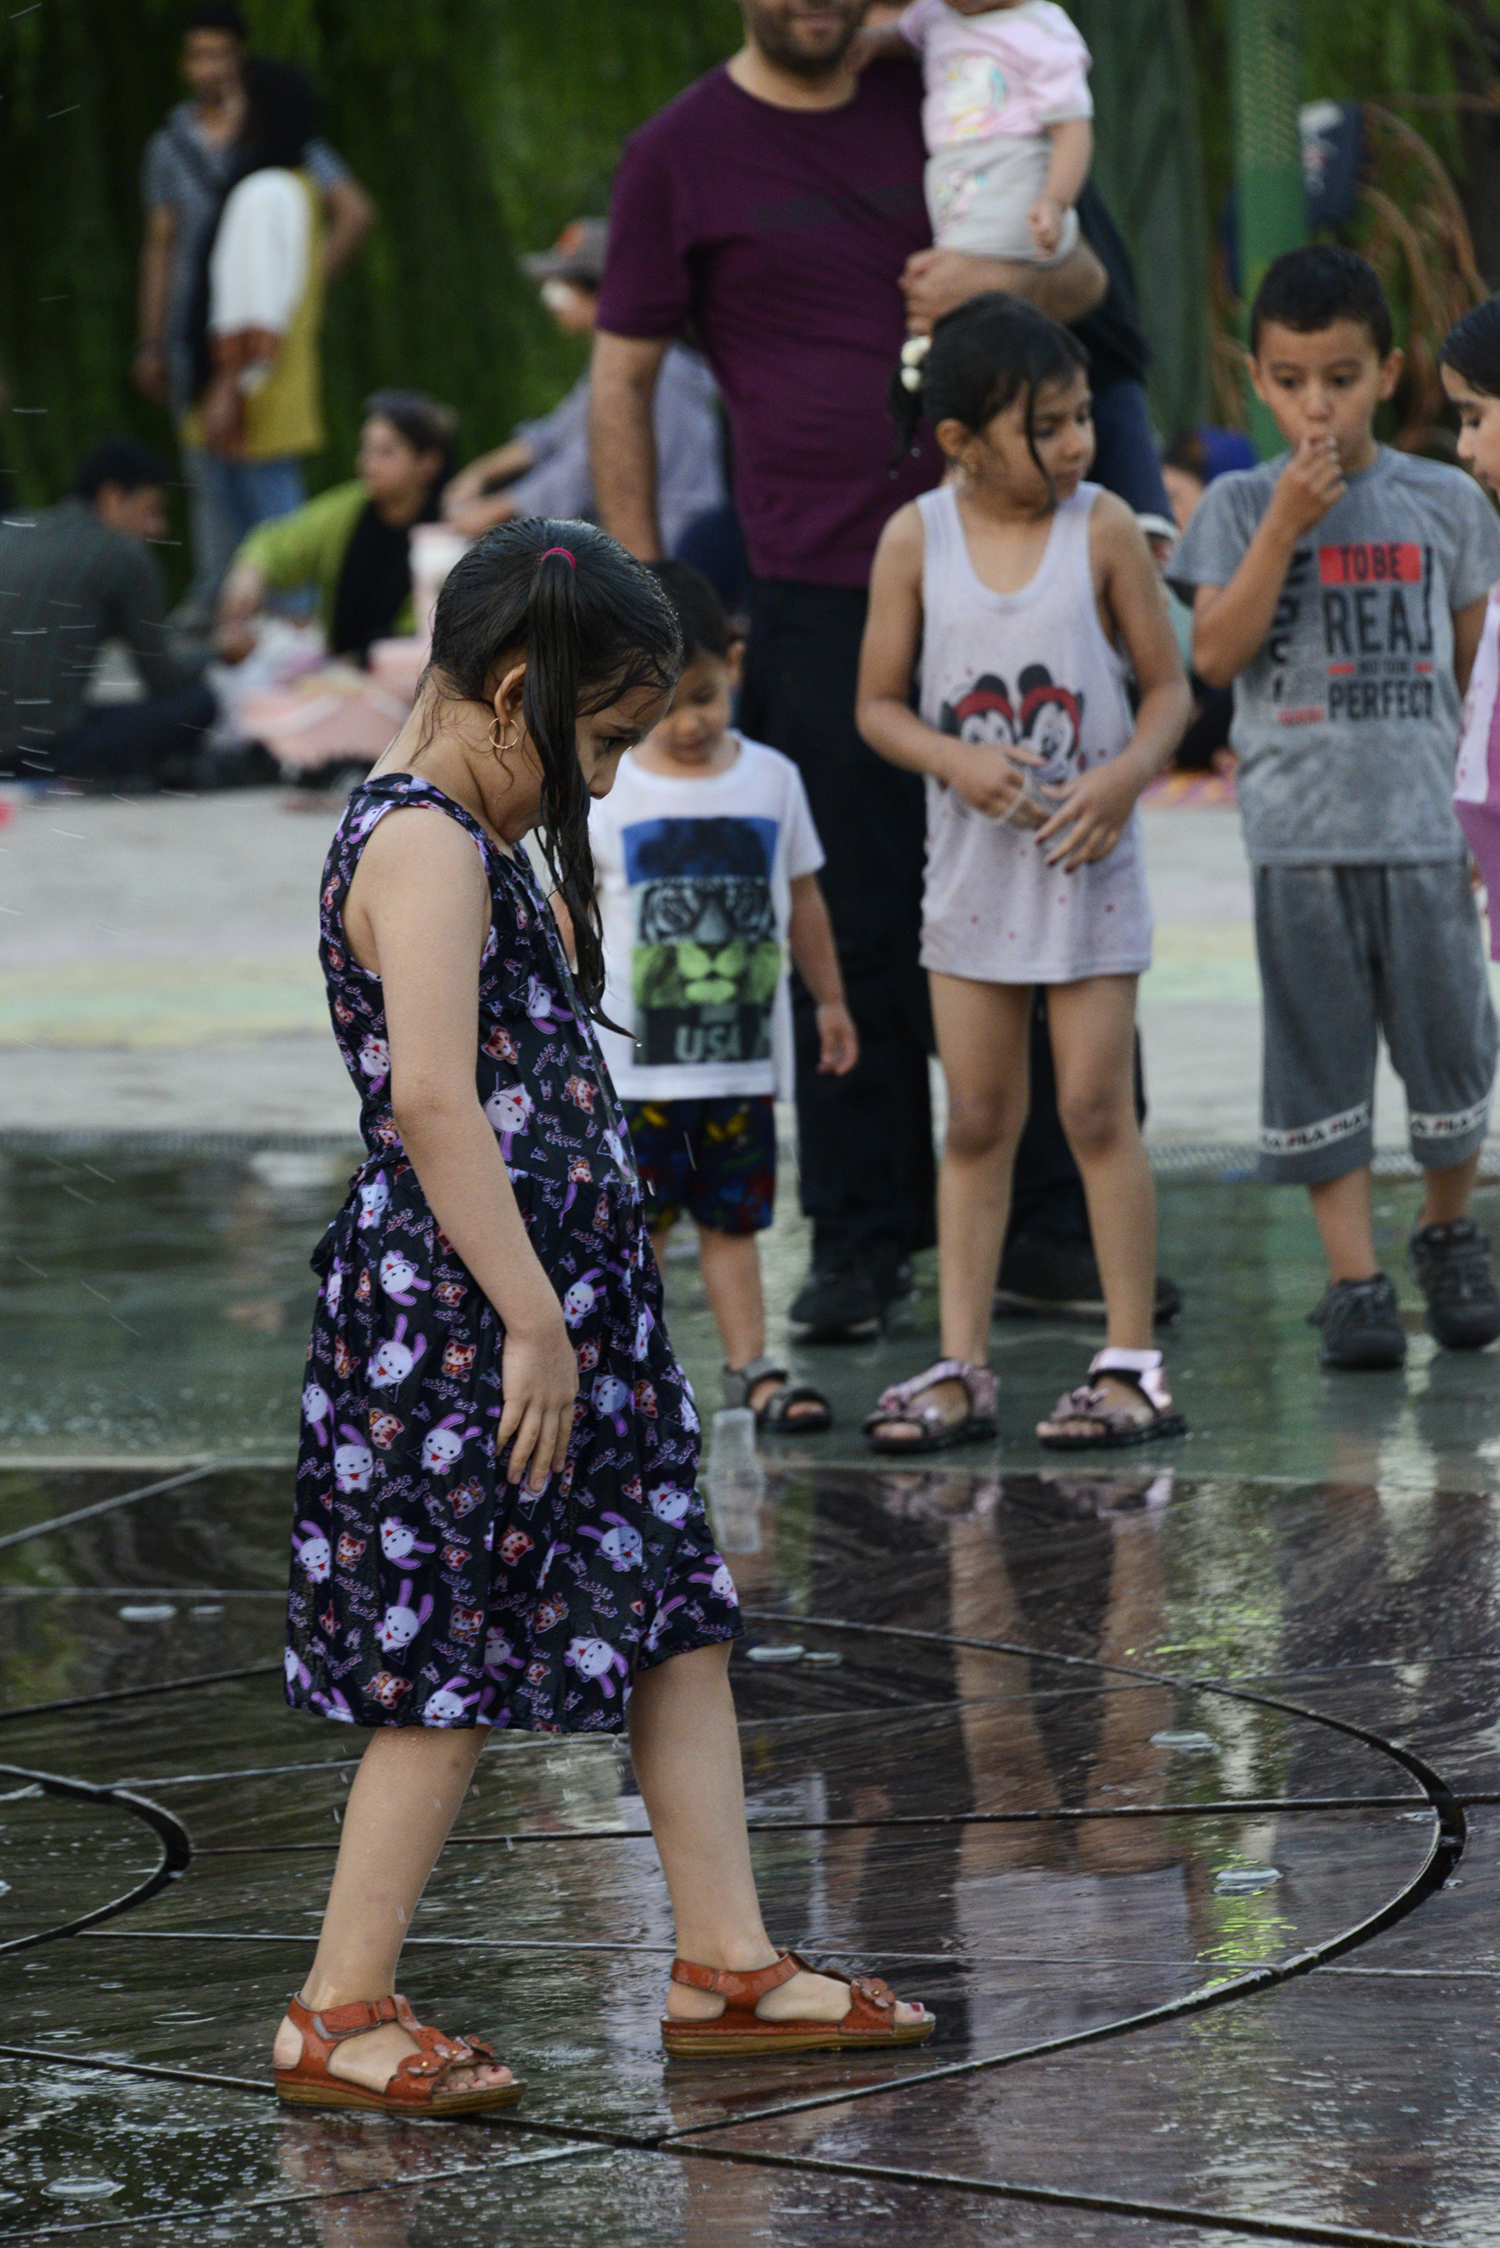 "Ab-o-Atash Park Tehran, Iran people enjoying water fountains"